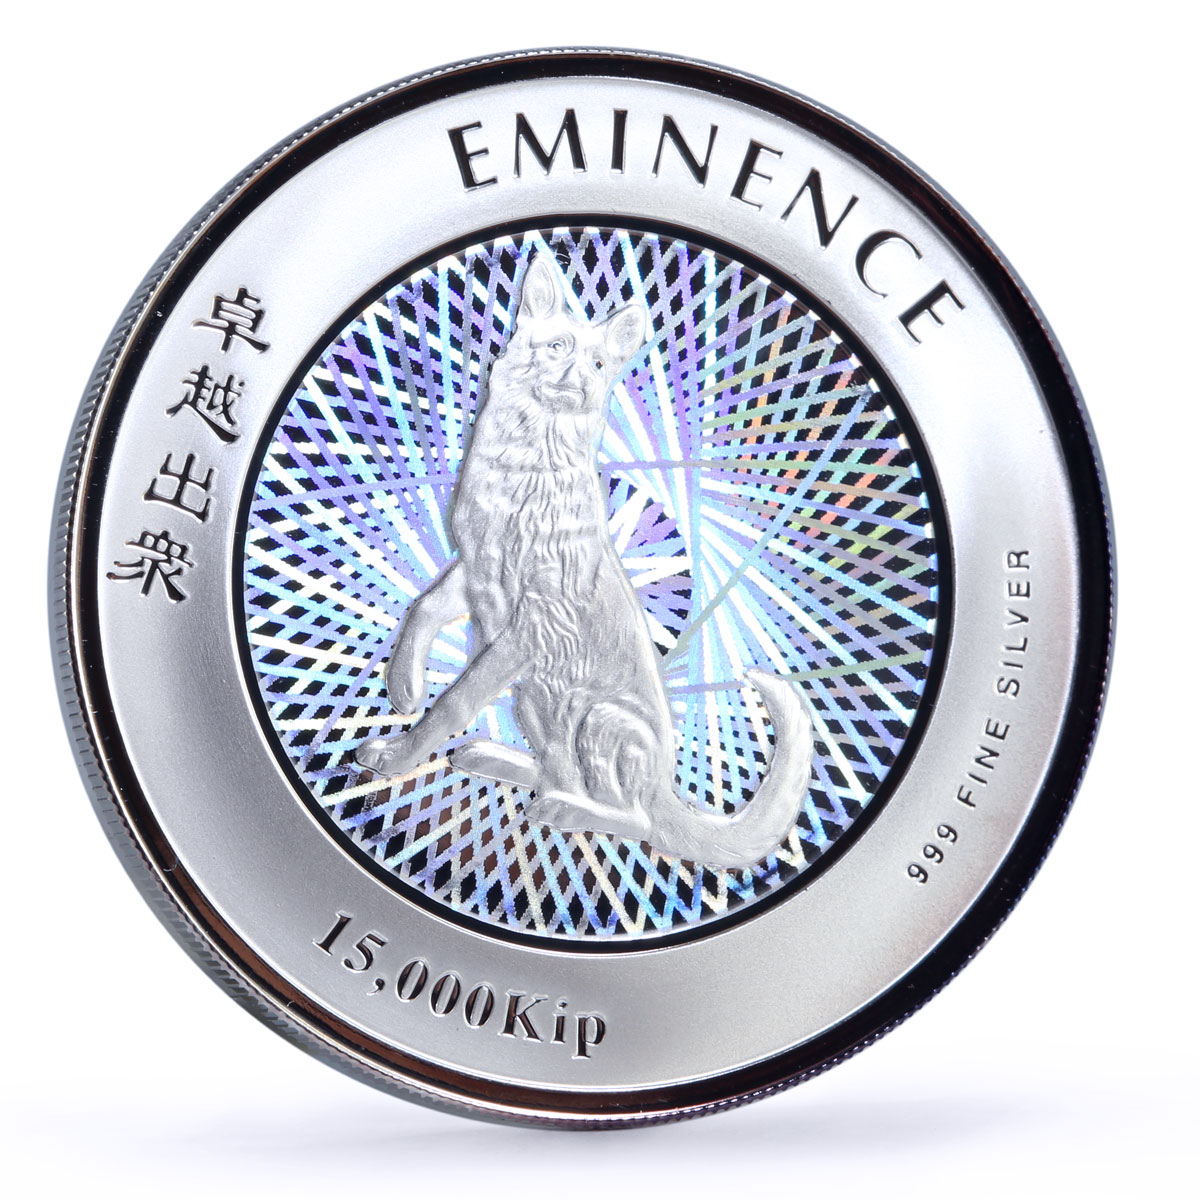 Laos 15000 kip Lunar Calendar Year of the Dog Eminence hologram silver coin 2006